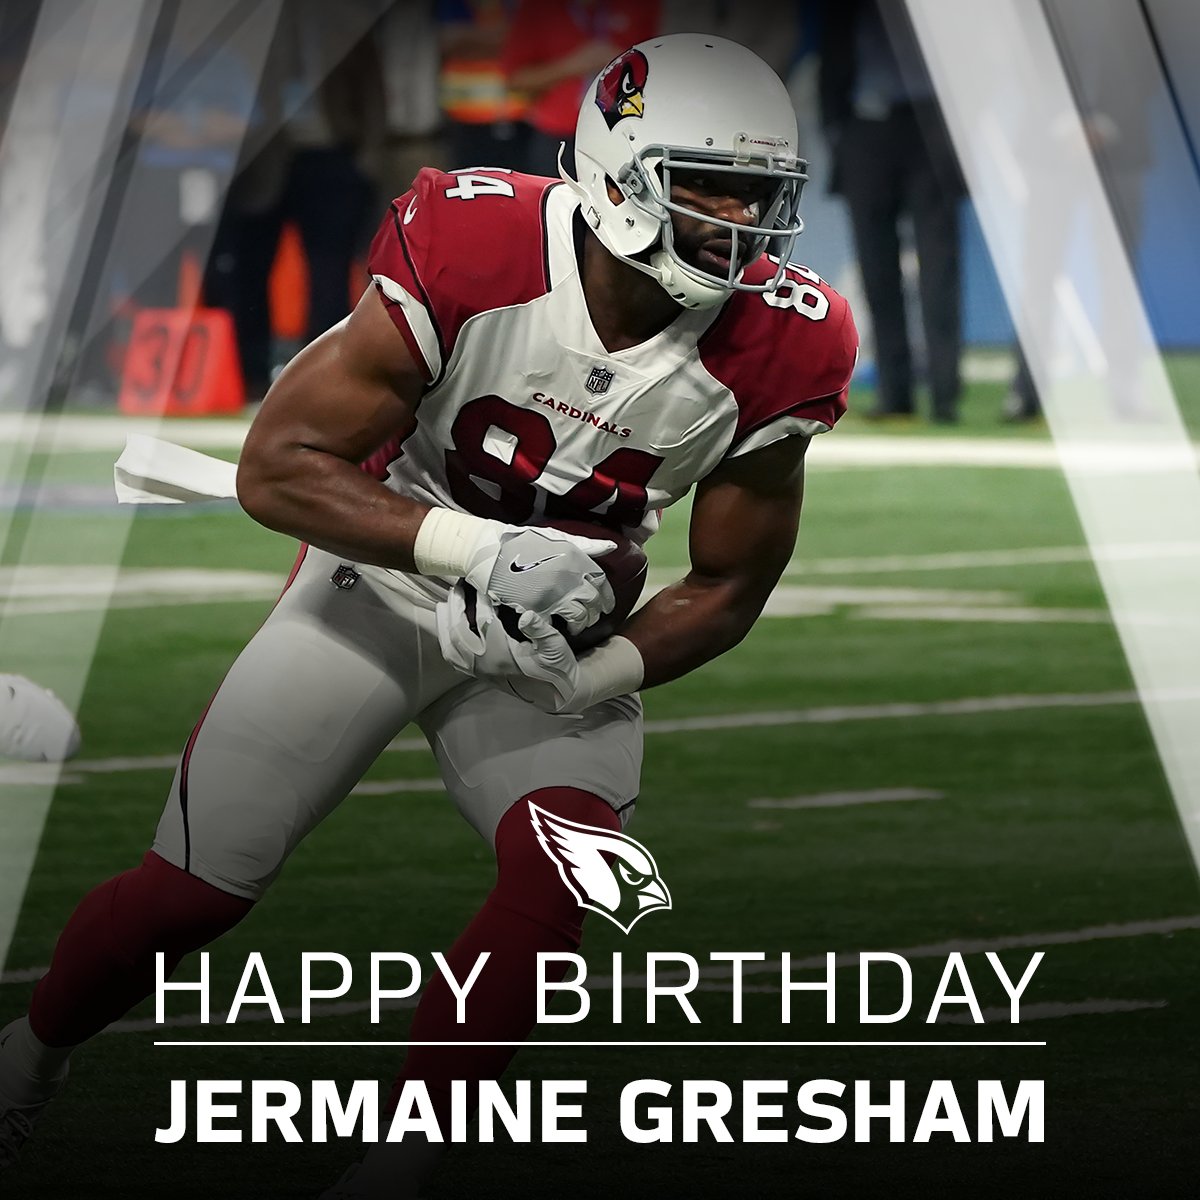 Happy Birthday to good-natured Gresham. https://t.co/8PnltURrOs